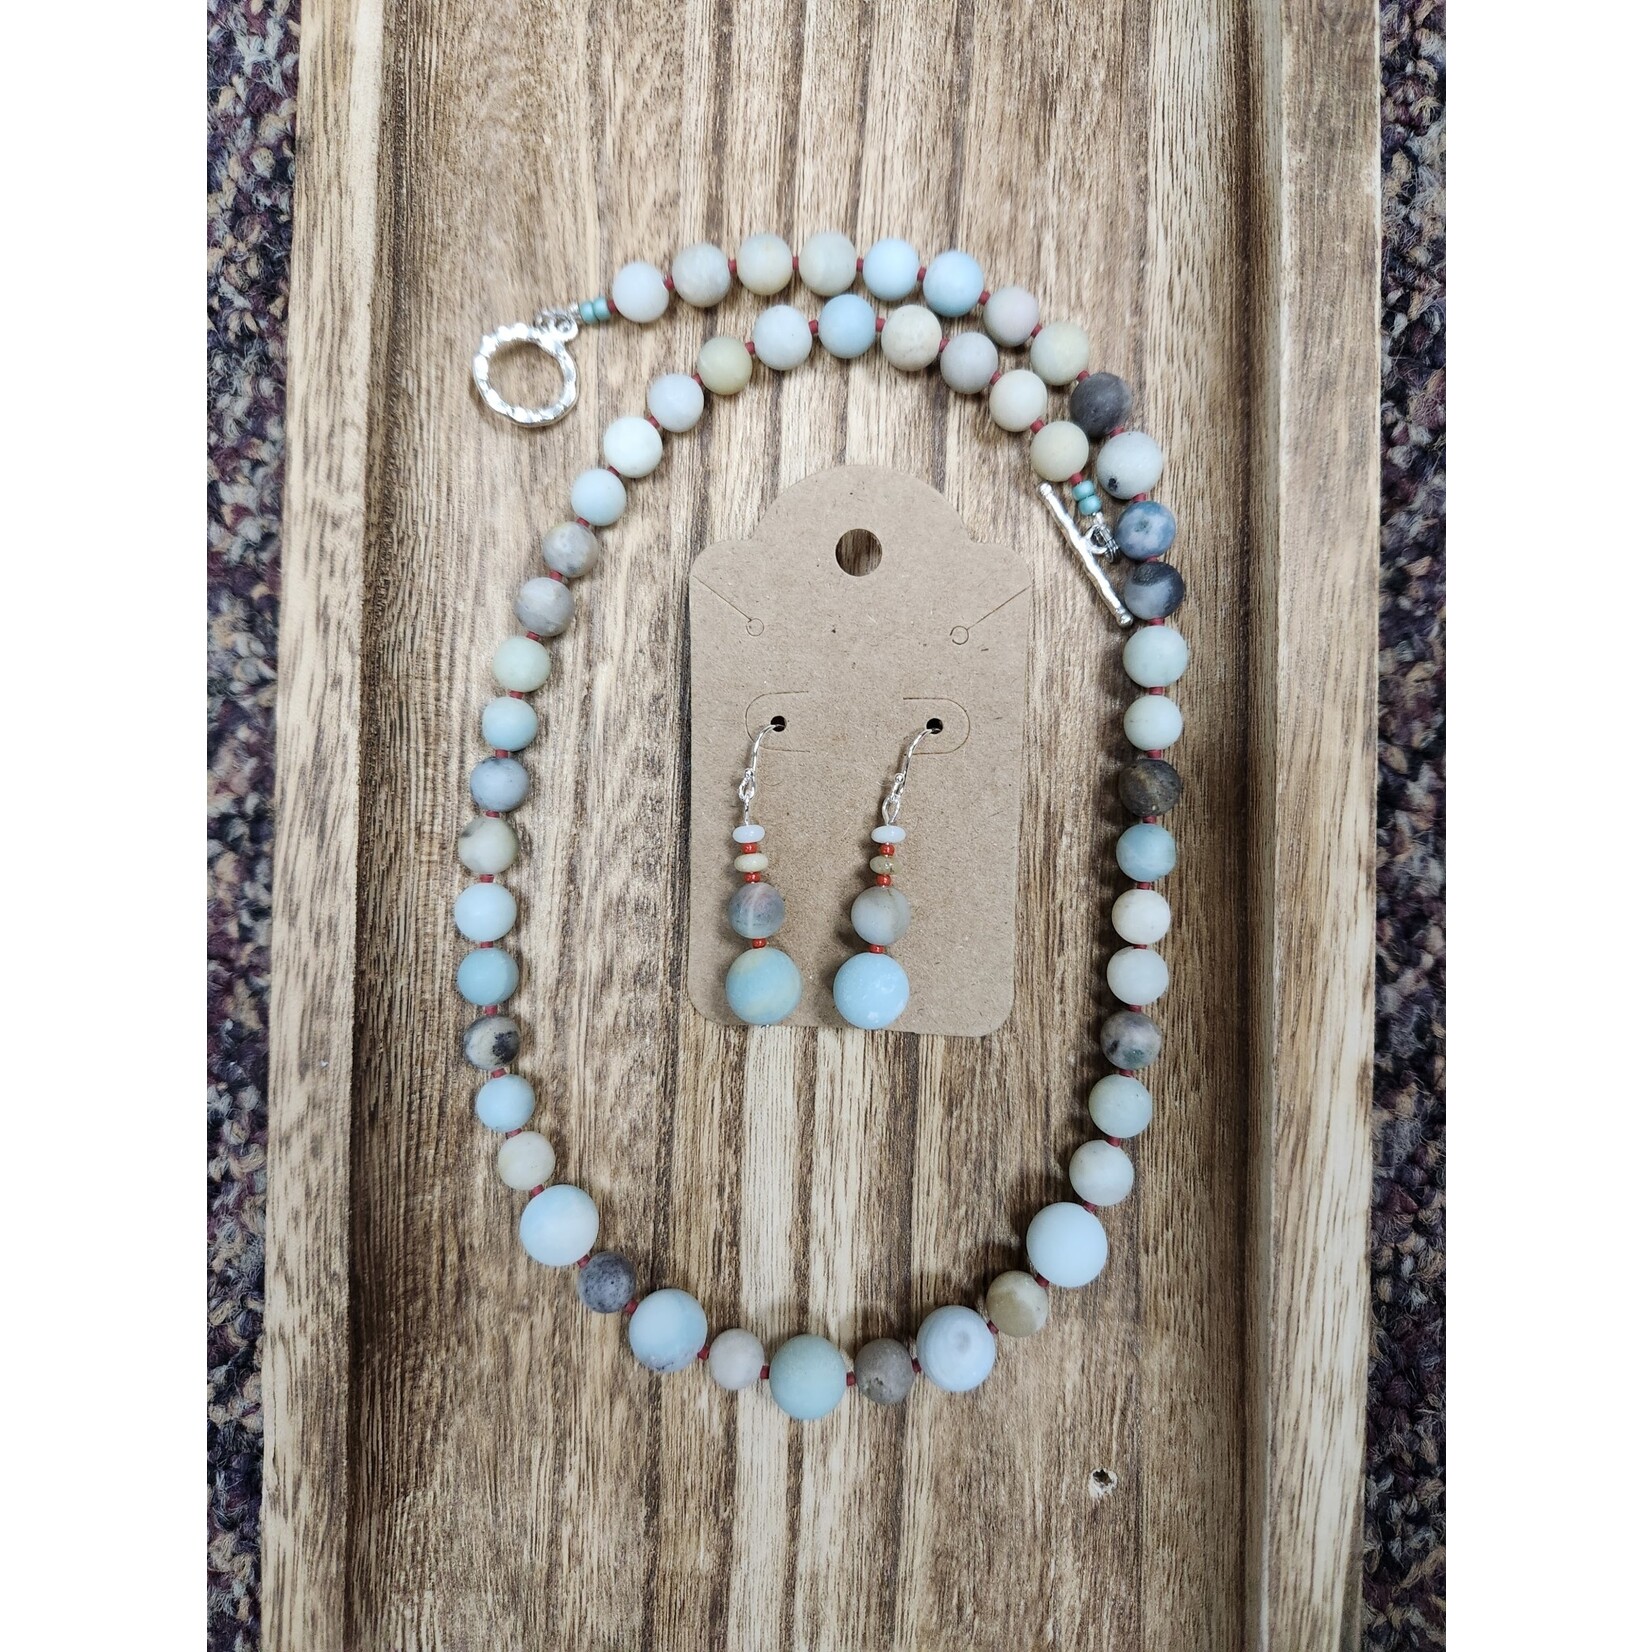 HB Designs Amazonite stone necklace earing set